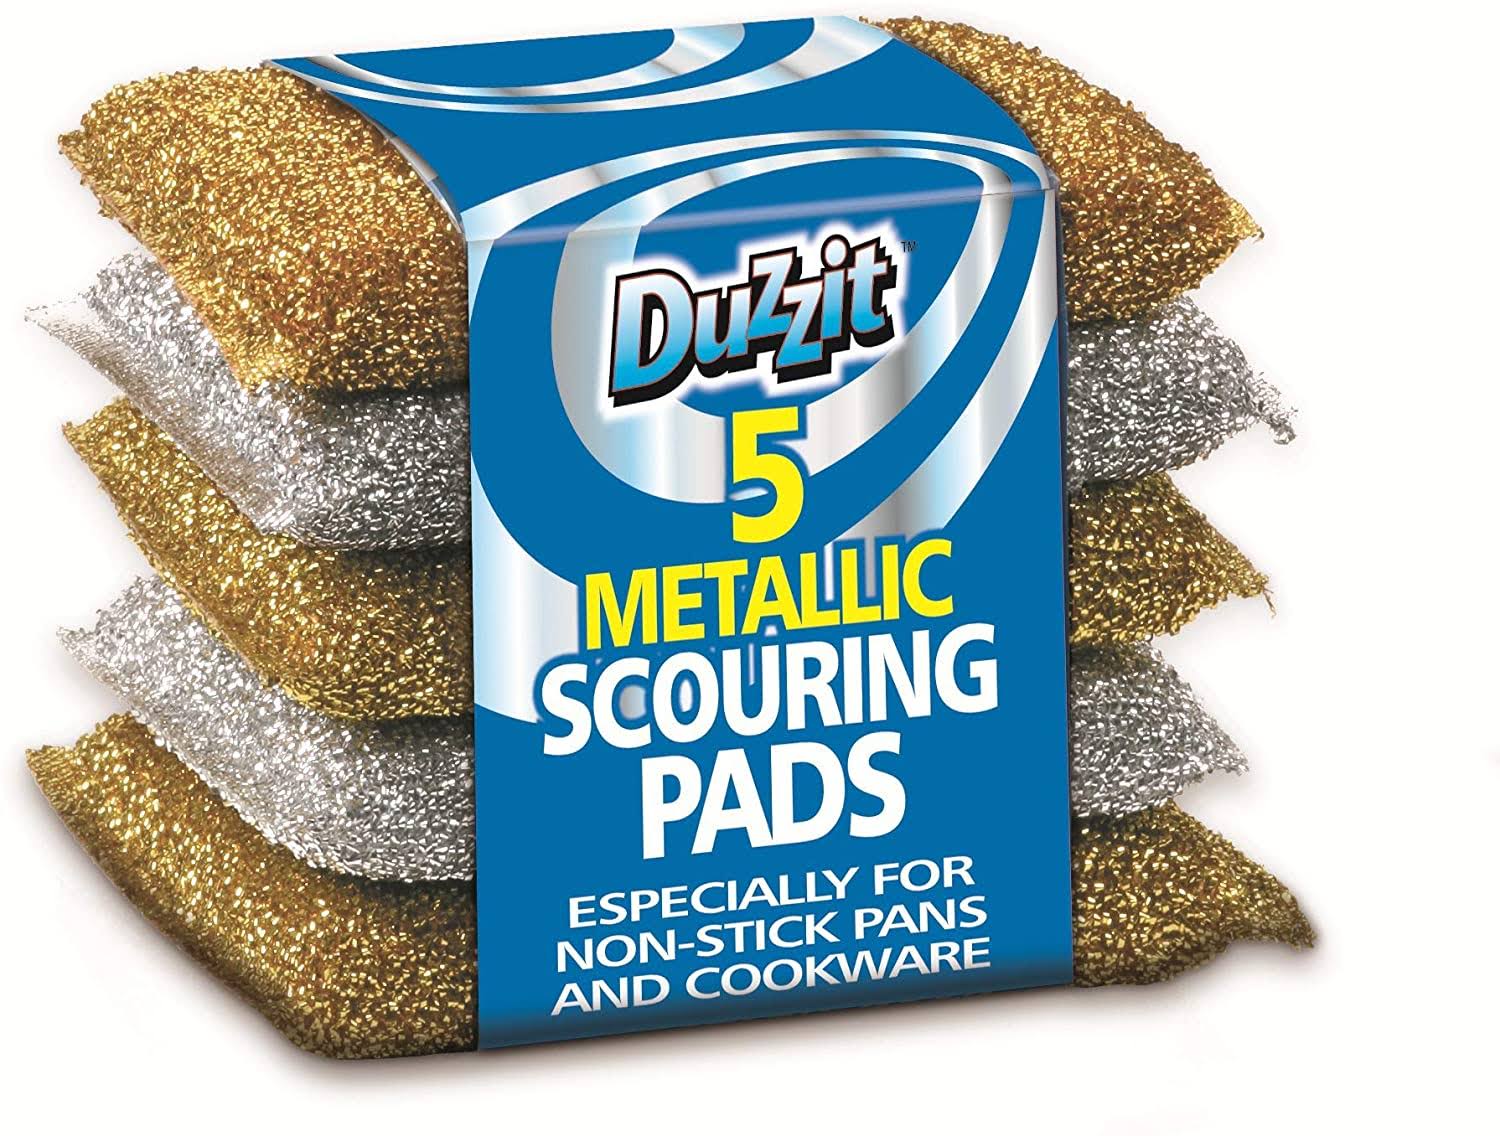 Duzzit Metallic Scouring Pads - 5 Metallic Scouring Pads